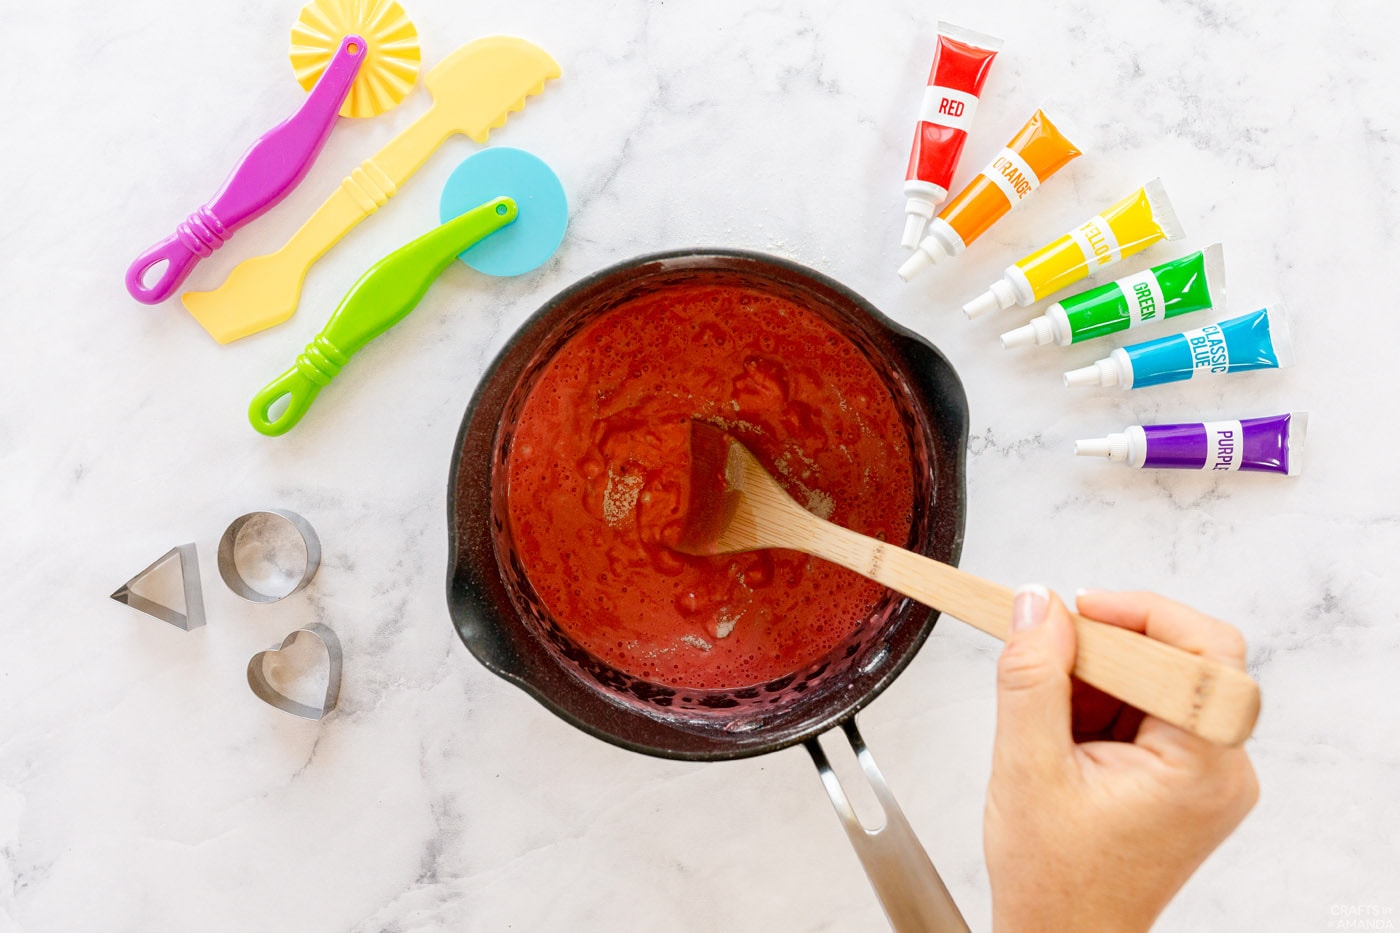 stirring red play dough in a saucepan